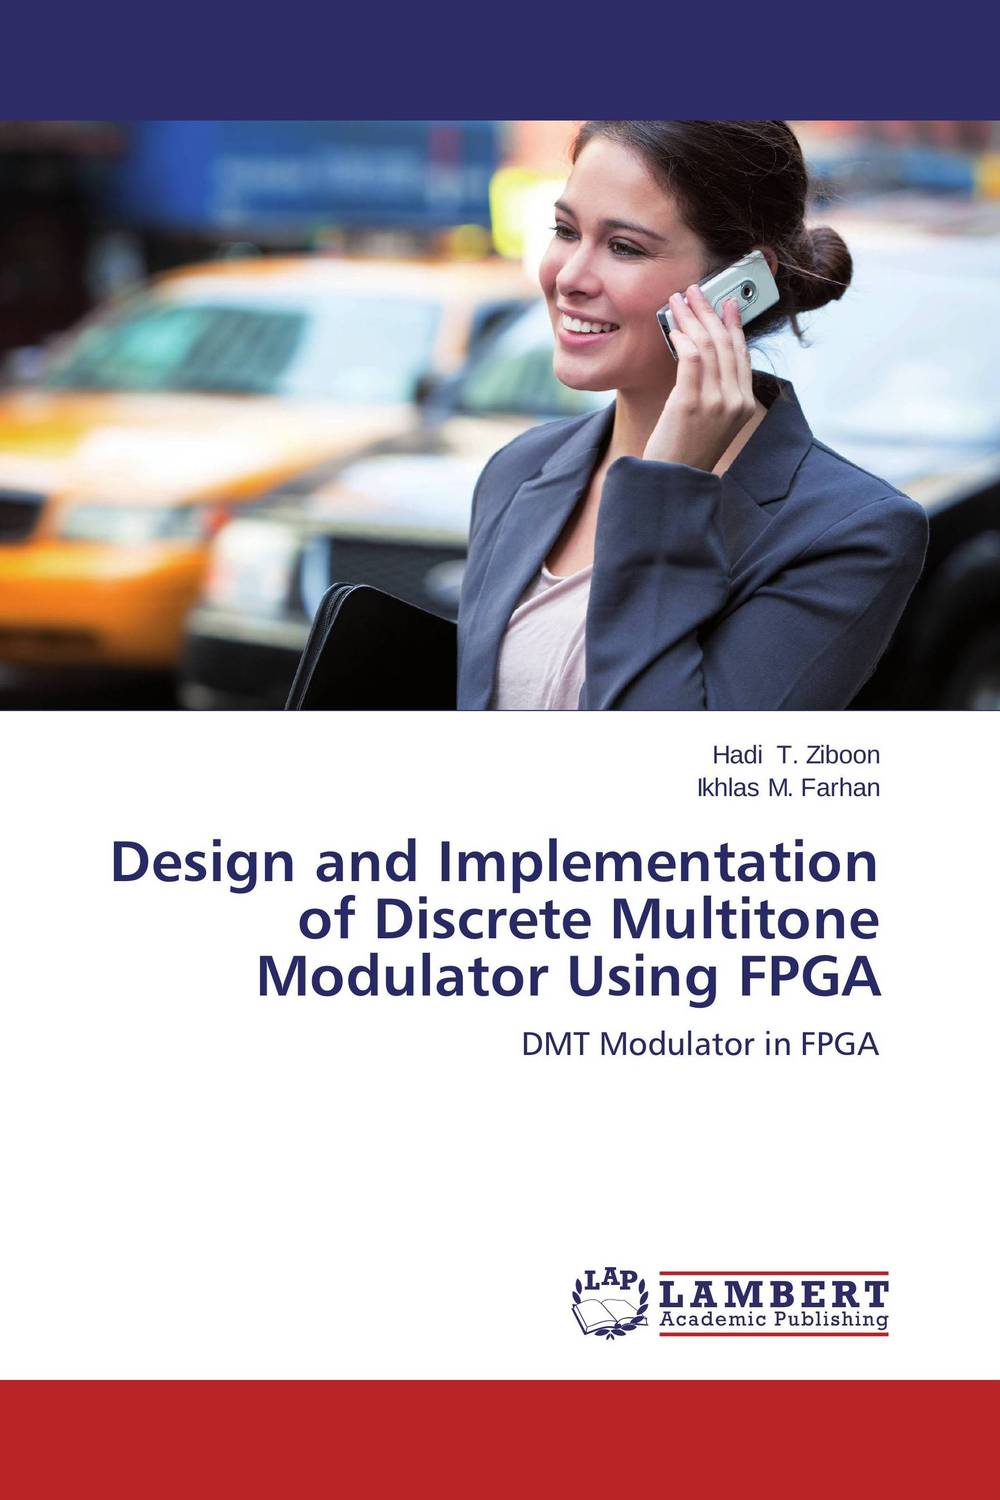 Design and Implementation of Discrete Multitone Modulator Using FPGA